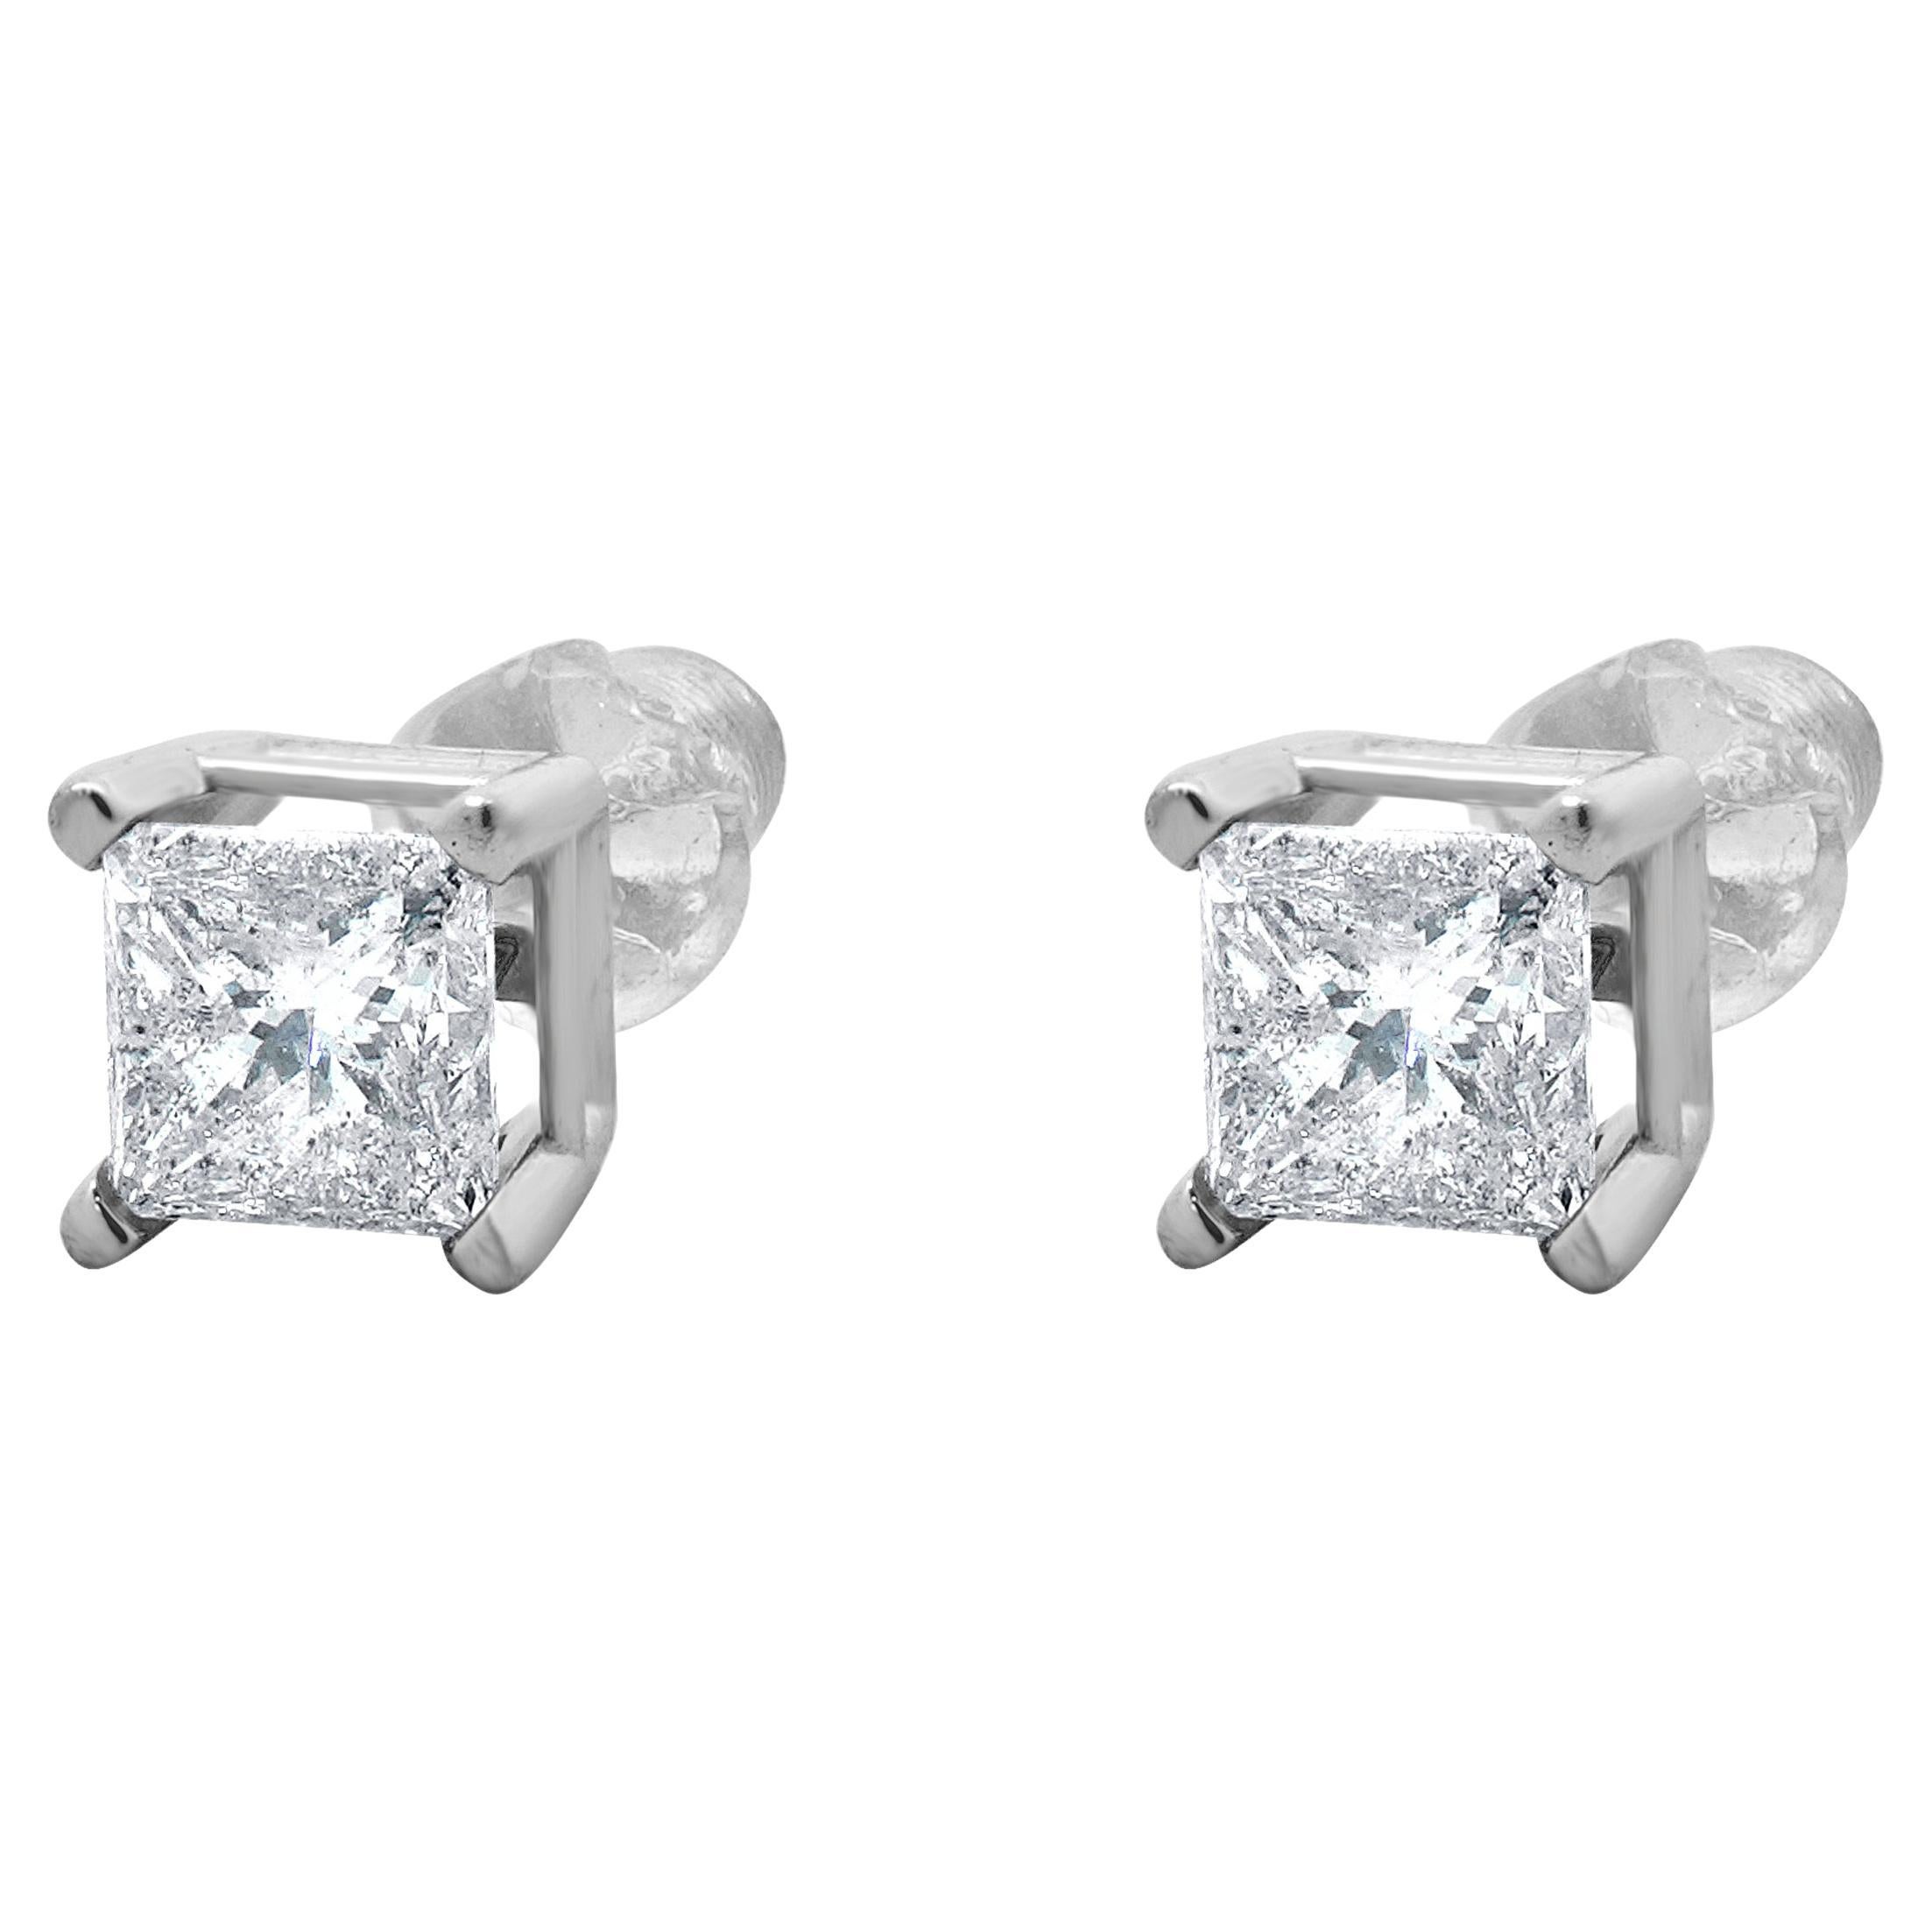 14 Karat White Gold Princess Cut Diamond Stud Earrings